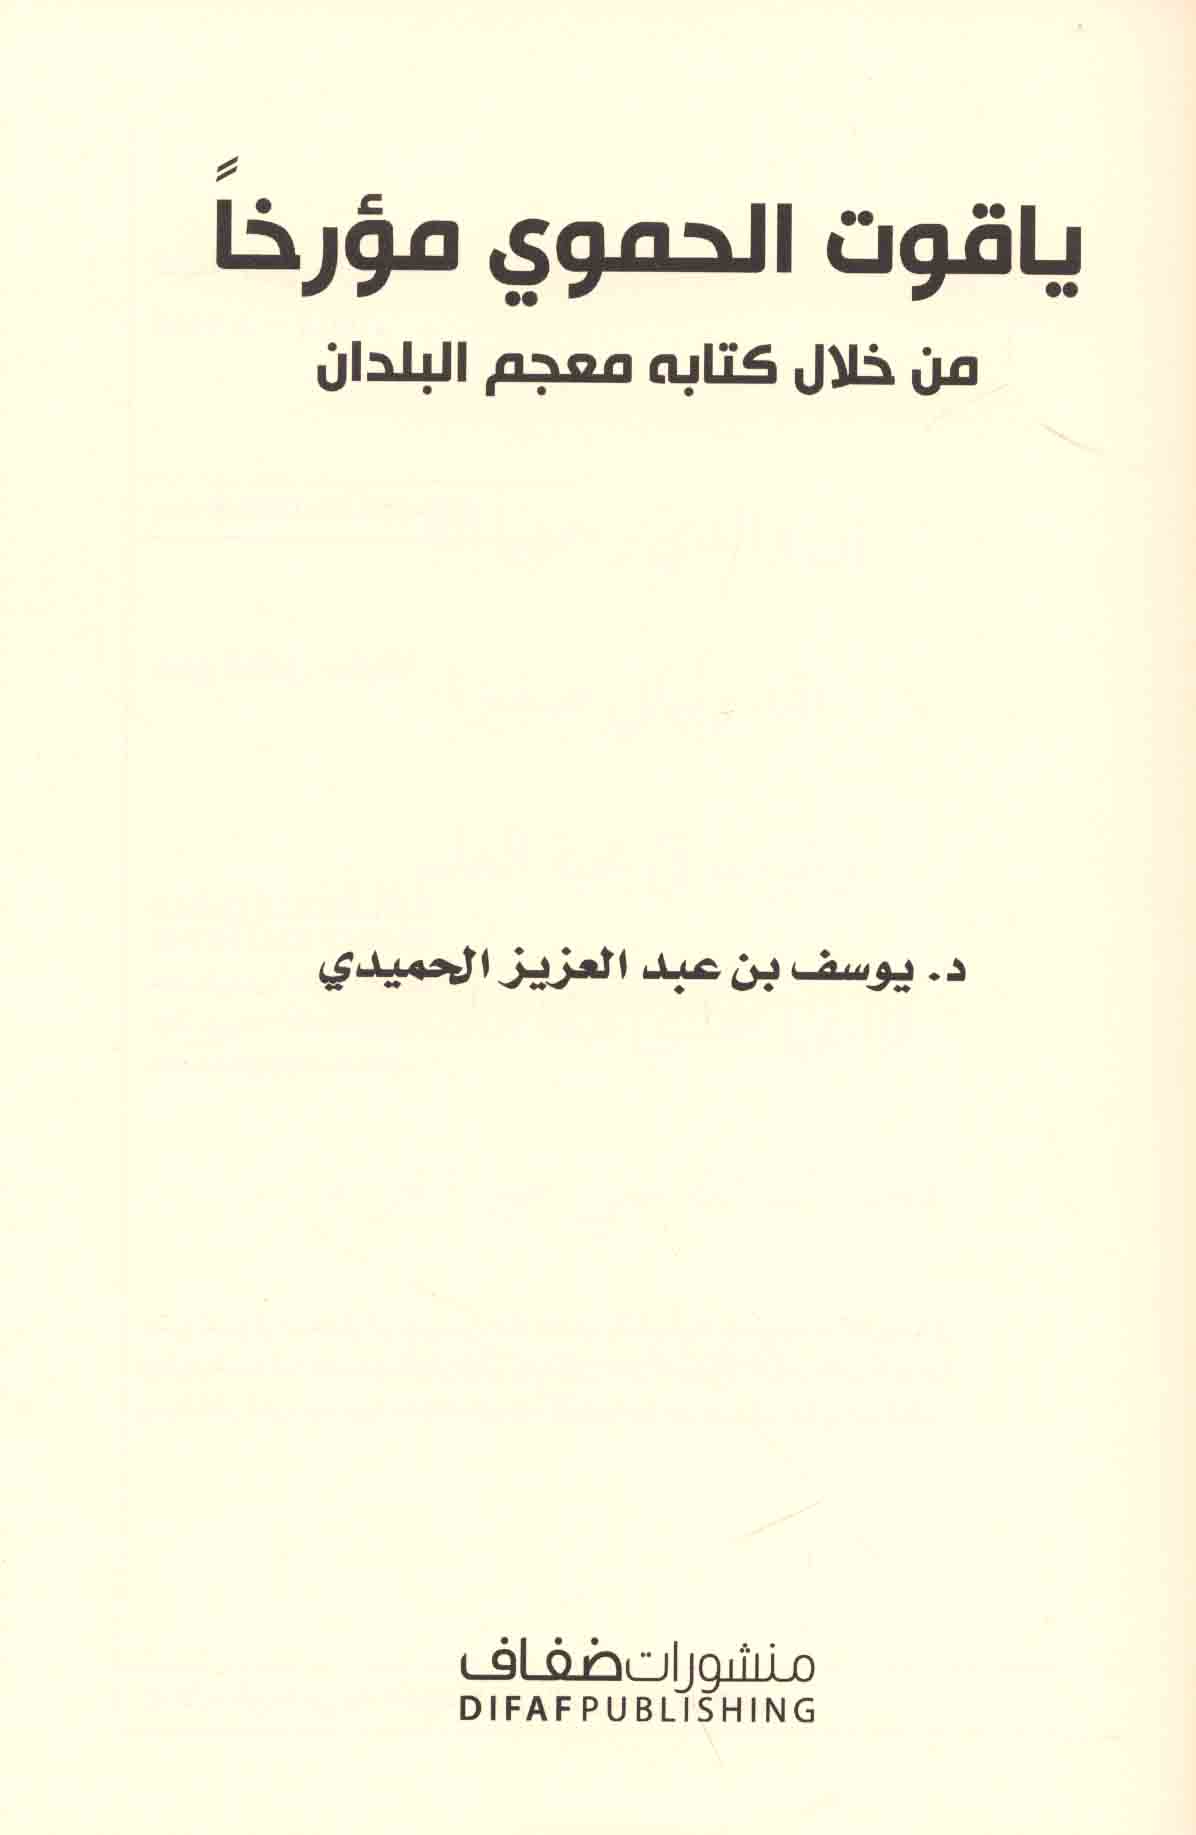 ÙŠÙ€Ø§Ù‚Ù€ÙˆØª Ø§Ù„Ù€Ø­Ù€Ù…Ù€ÙˆÙŠ Ù…Ù€Ø¤Ø±Ø®Ù€Ø§ Ù…Ù€Ù† Ø®Ù€Ù„Ø§Ù„ ÙƒÙ€ØªÙ€Ø§Ø¨Ù€Ù‡ Ù…Ù€Ø¹Ù€Ø¬Ù€Ù… Ø§Ù„Ù€Ø¨Ù€Ù„Ù€Ø¯Ø§Ù† Yaqut Al Hamawi Muarrikhan Min Khilali Kitabih Mujam Al Buldan Arabicbookshop Net Supplier Of Arabic Books